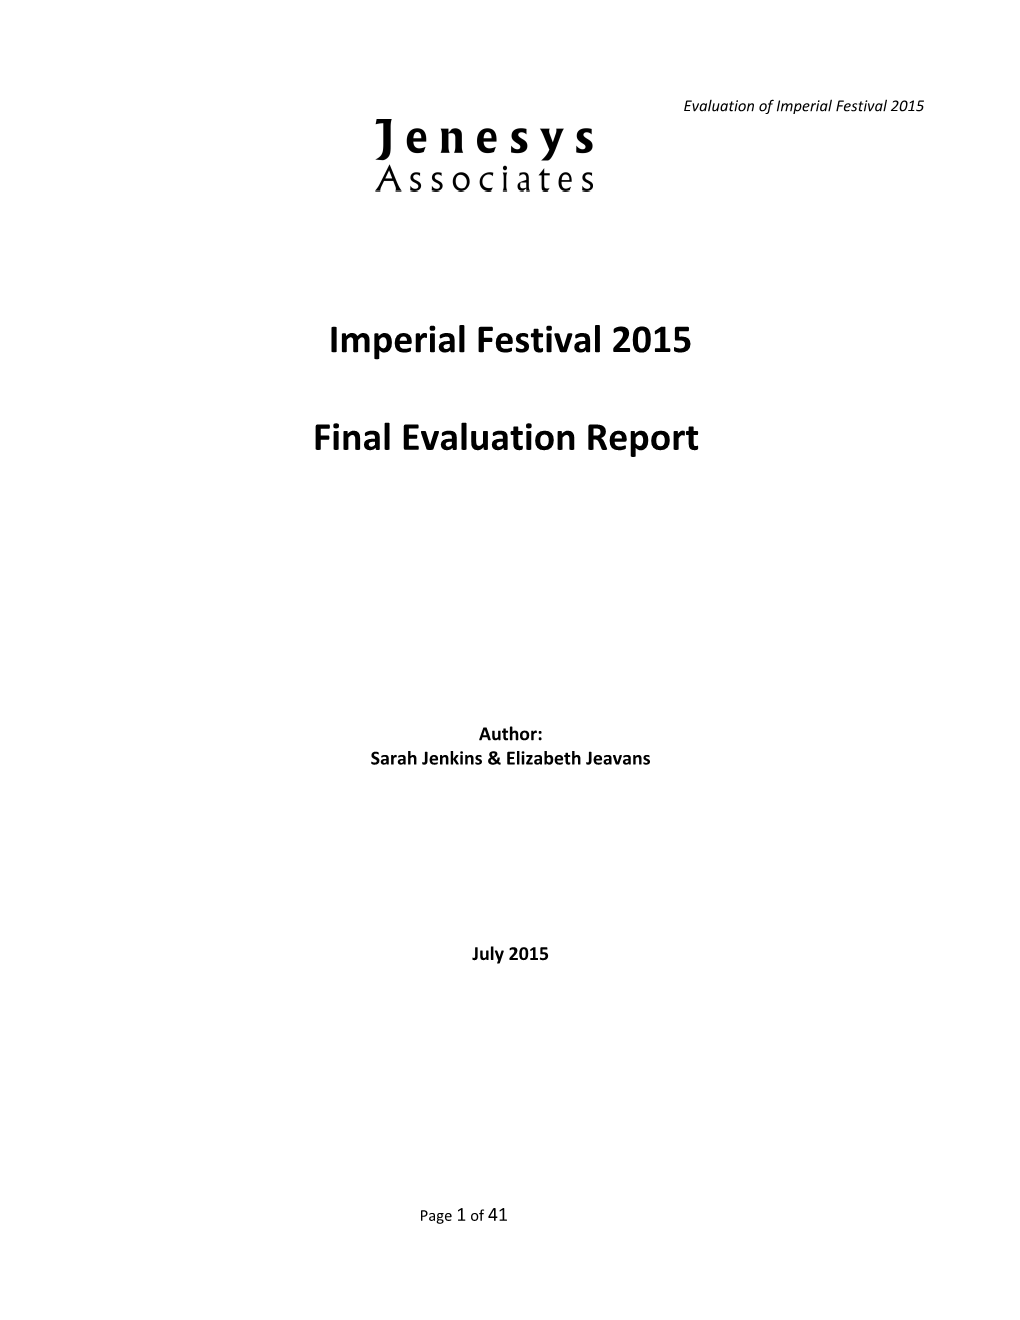 Imperial Festival 2015